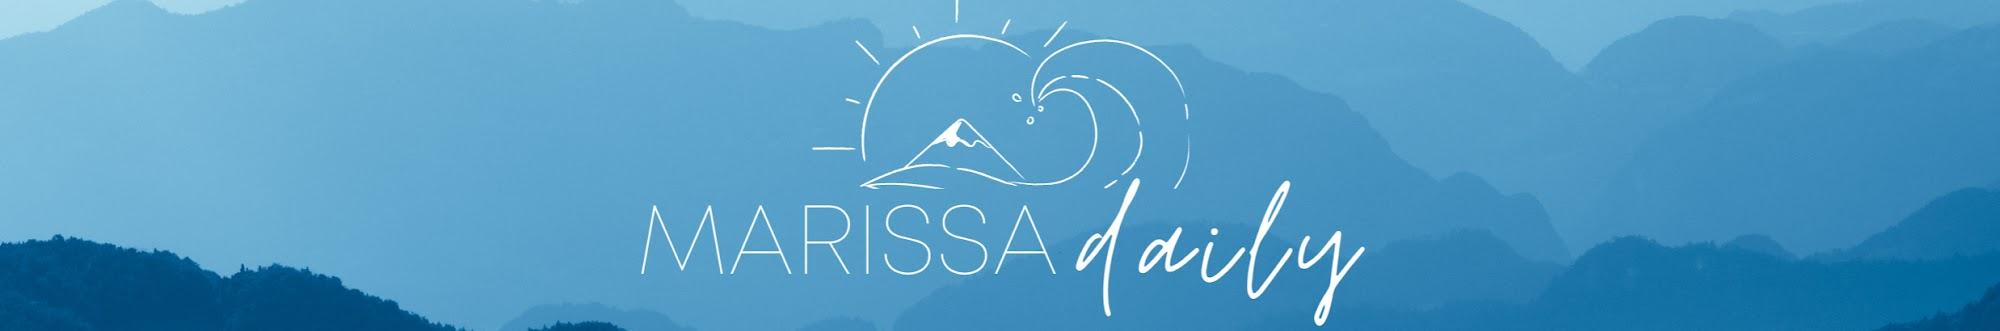 Marissa Daily - Travel & Adventure